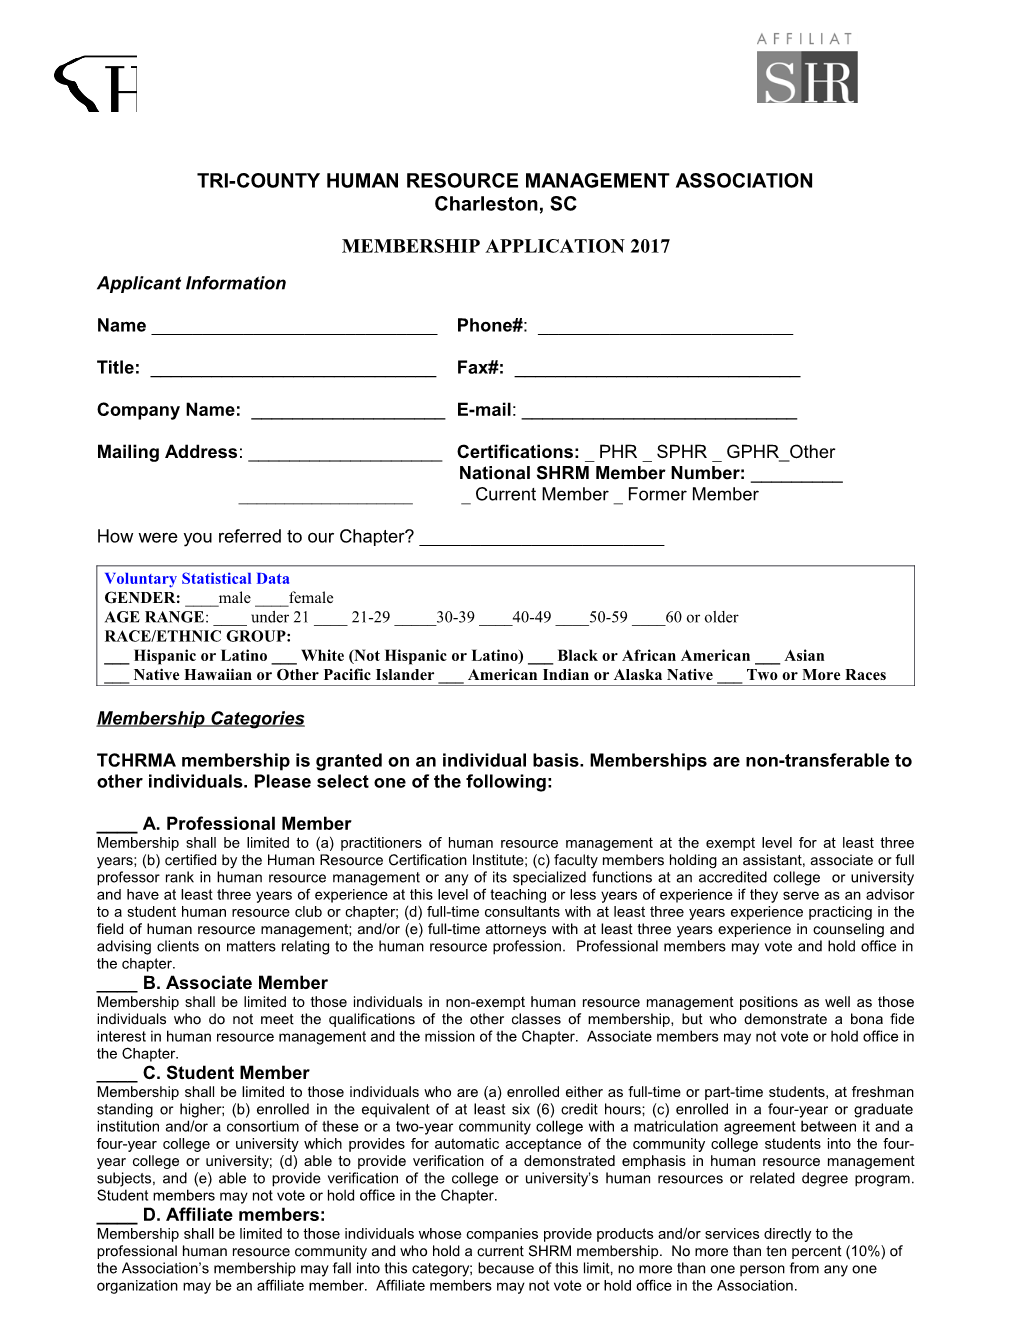 Tri-County Human Resourcemanagement Association